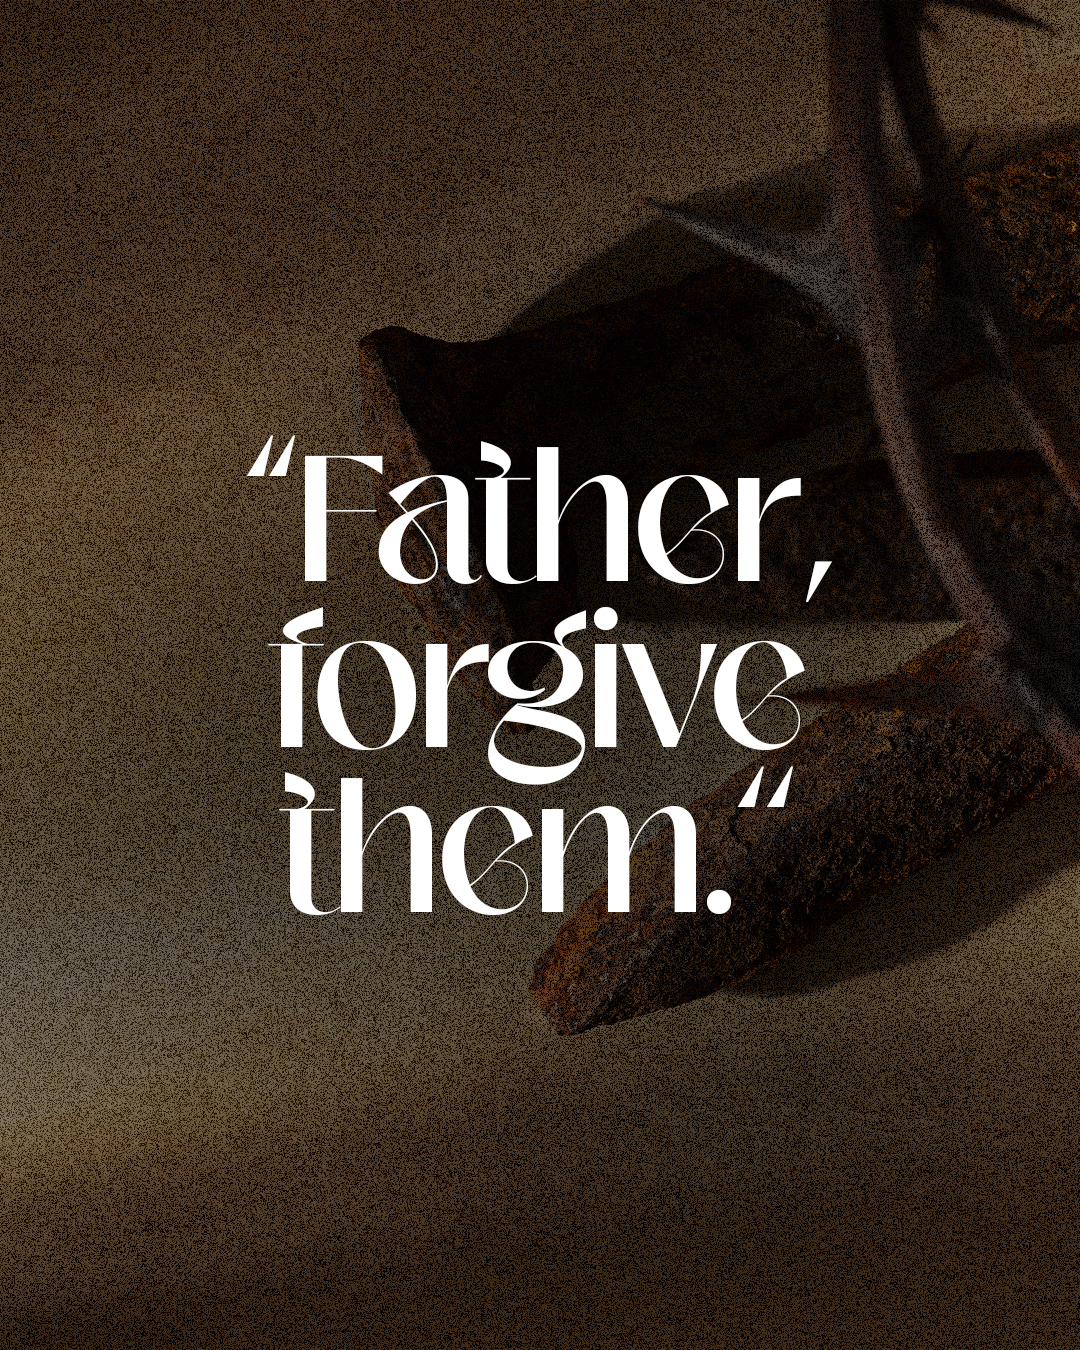 Father, forgive them.